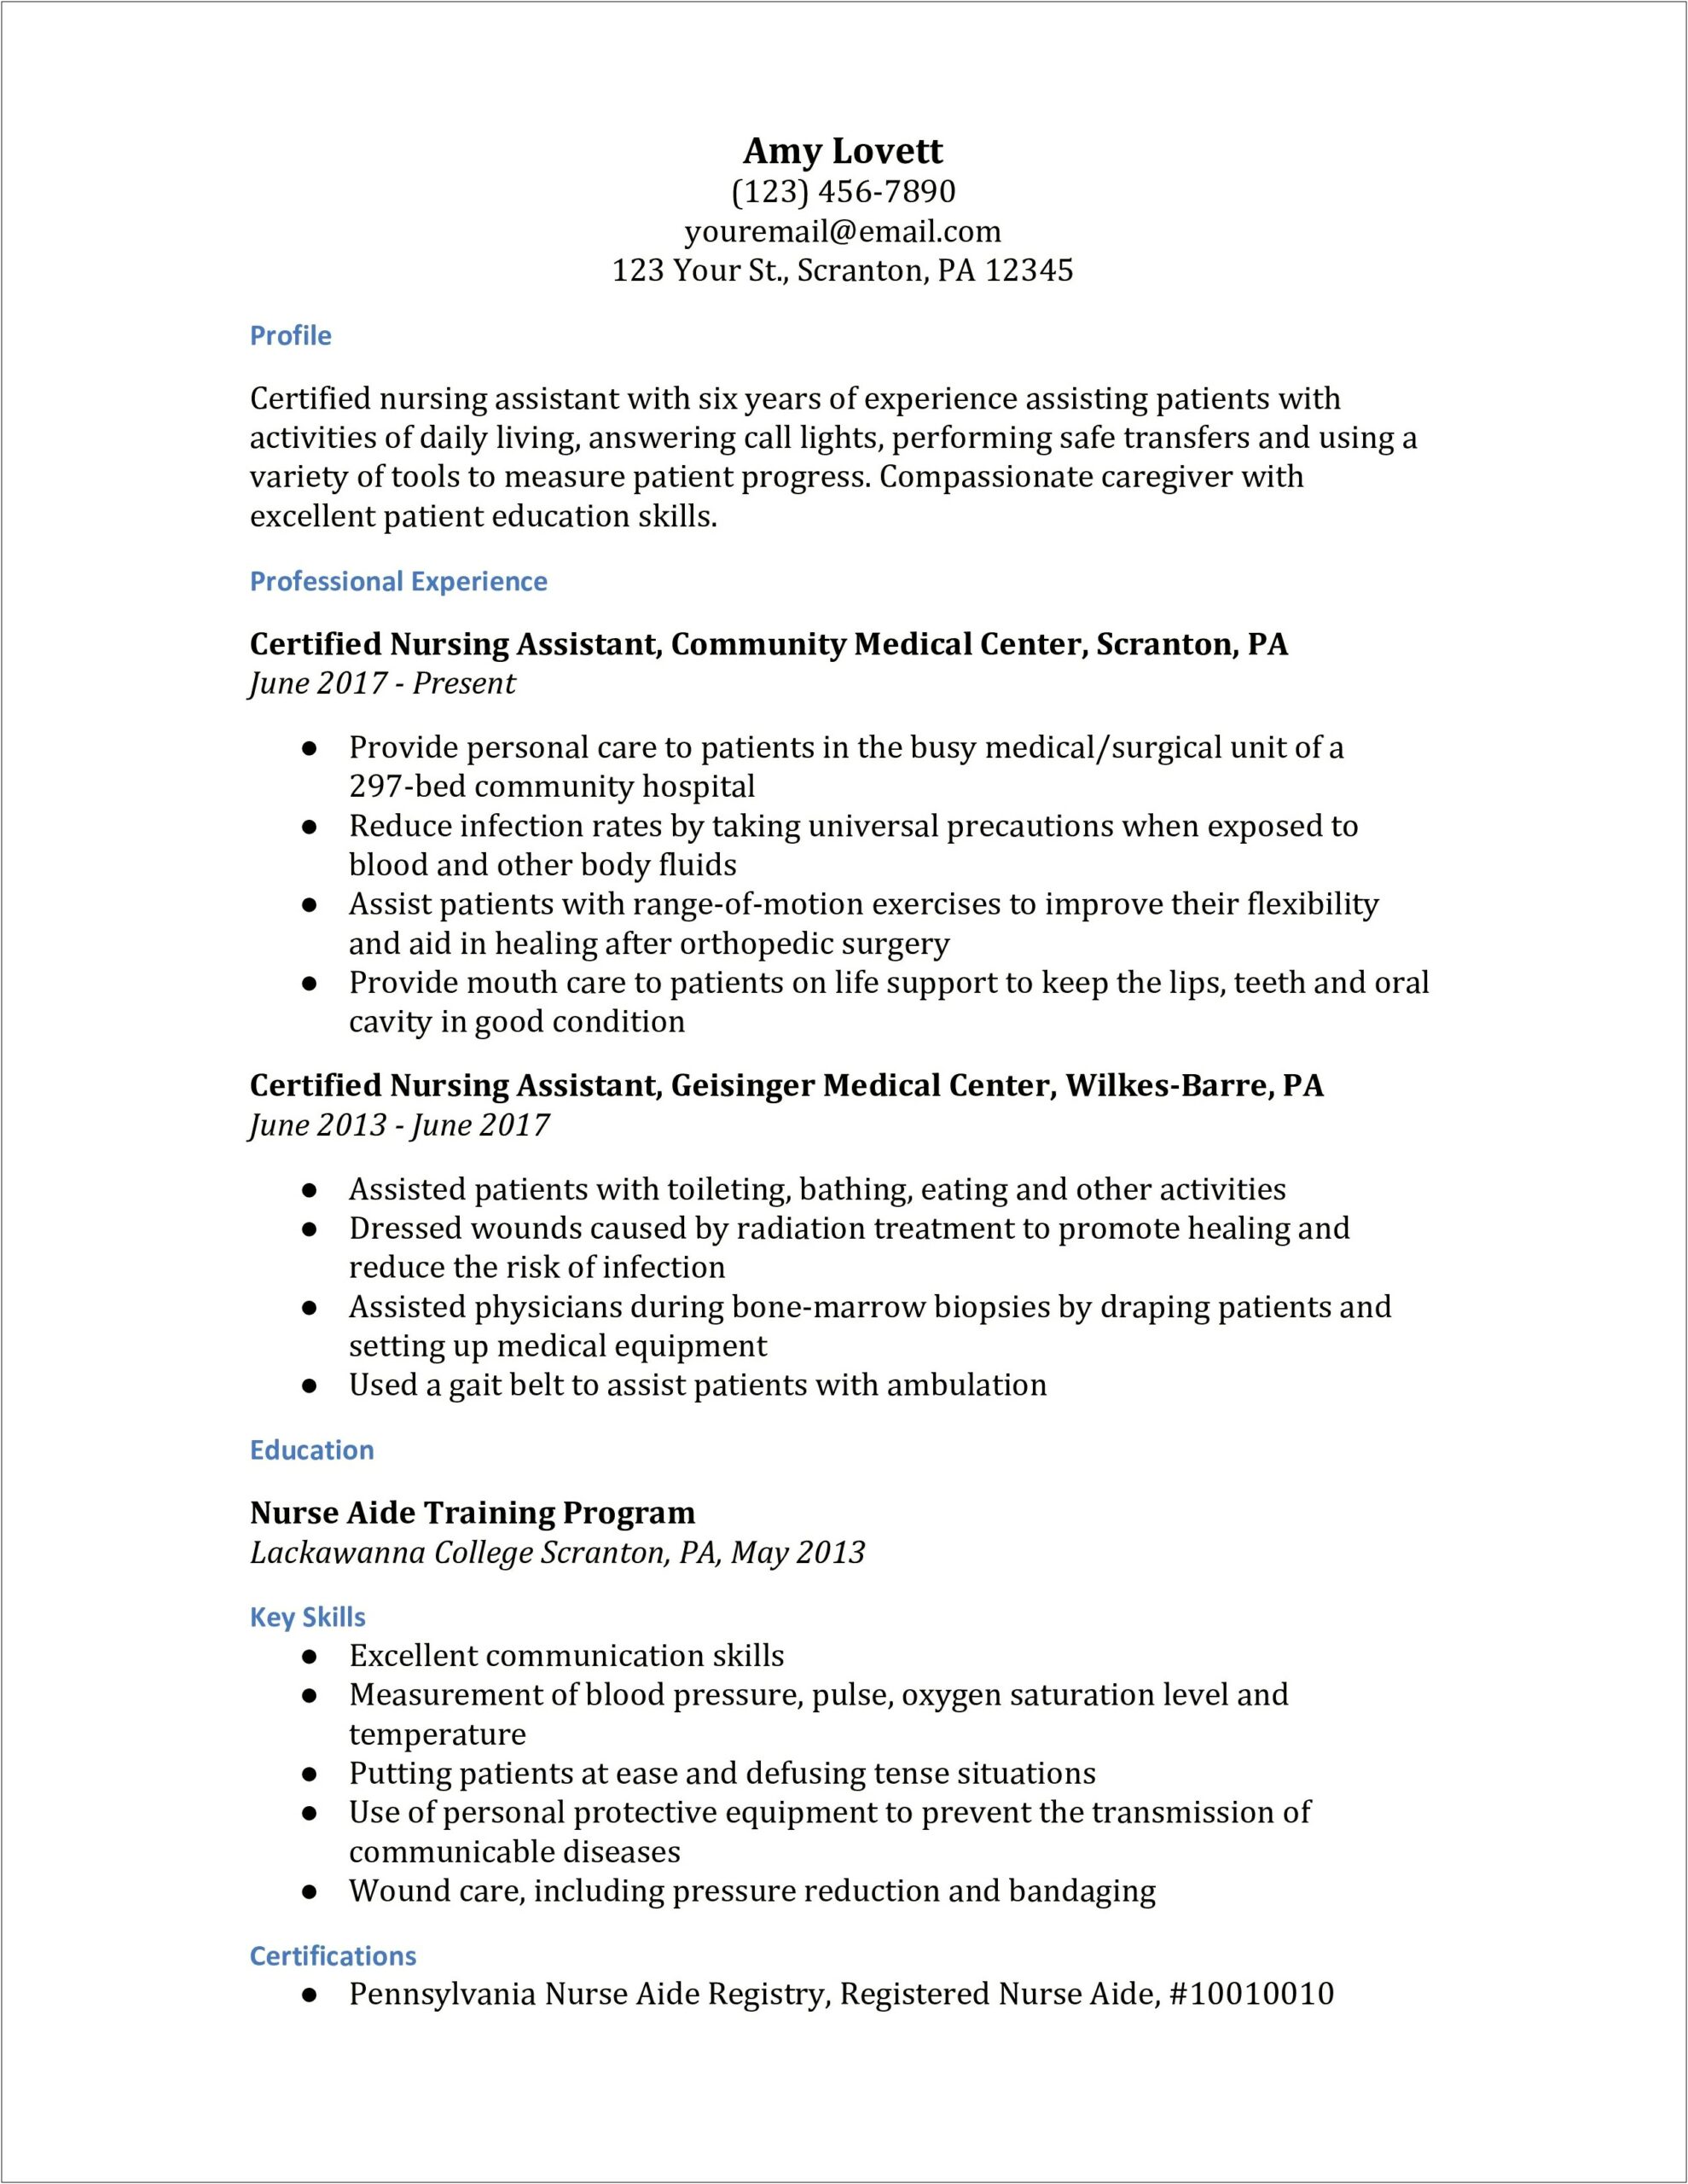 Nurse's Aide Job Description For Resume